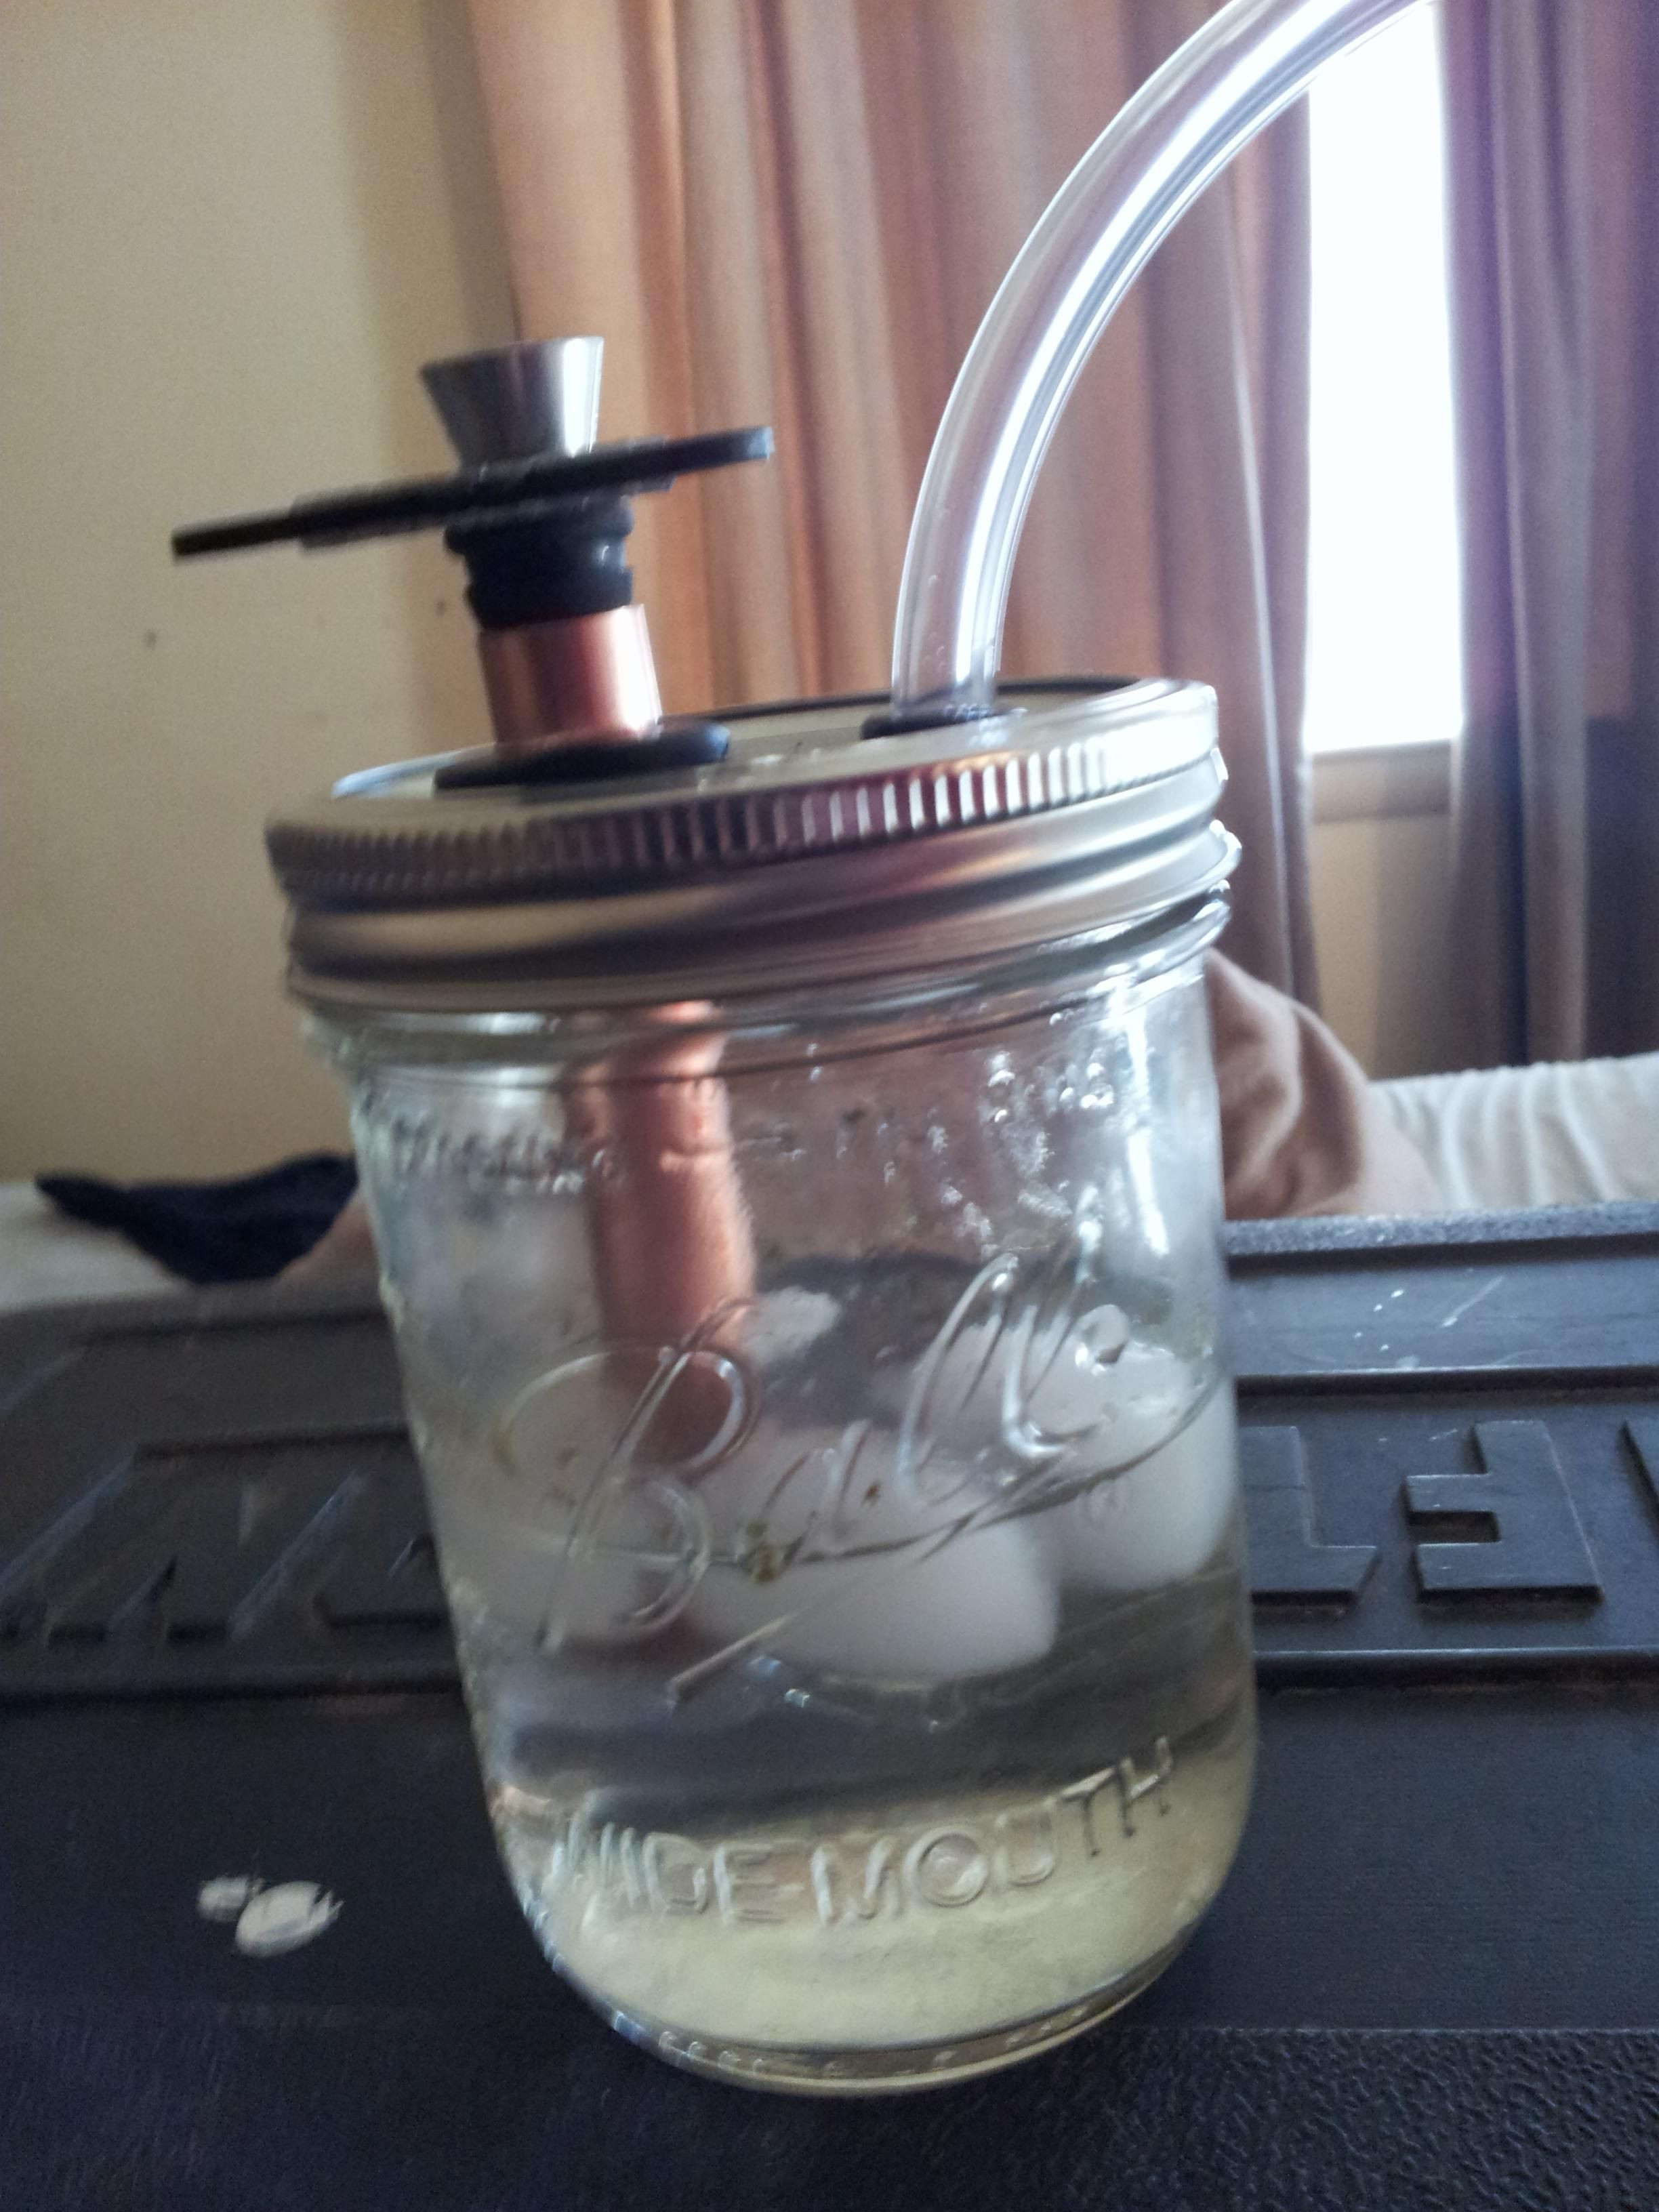 Best ideas about DIY Water Bong
. Save or Pin Homemade Mason Jar Bong cannabis Now.